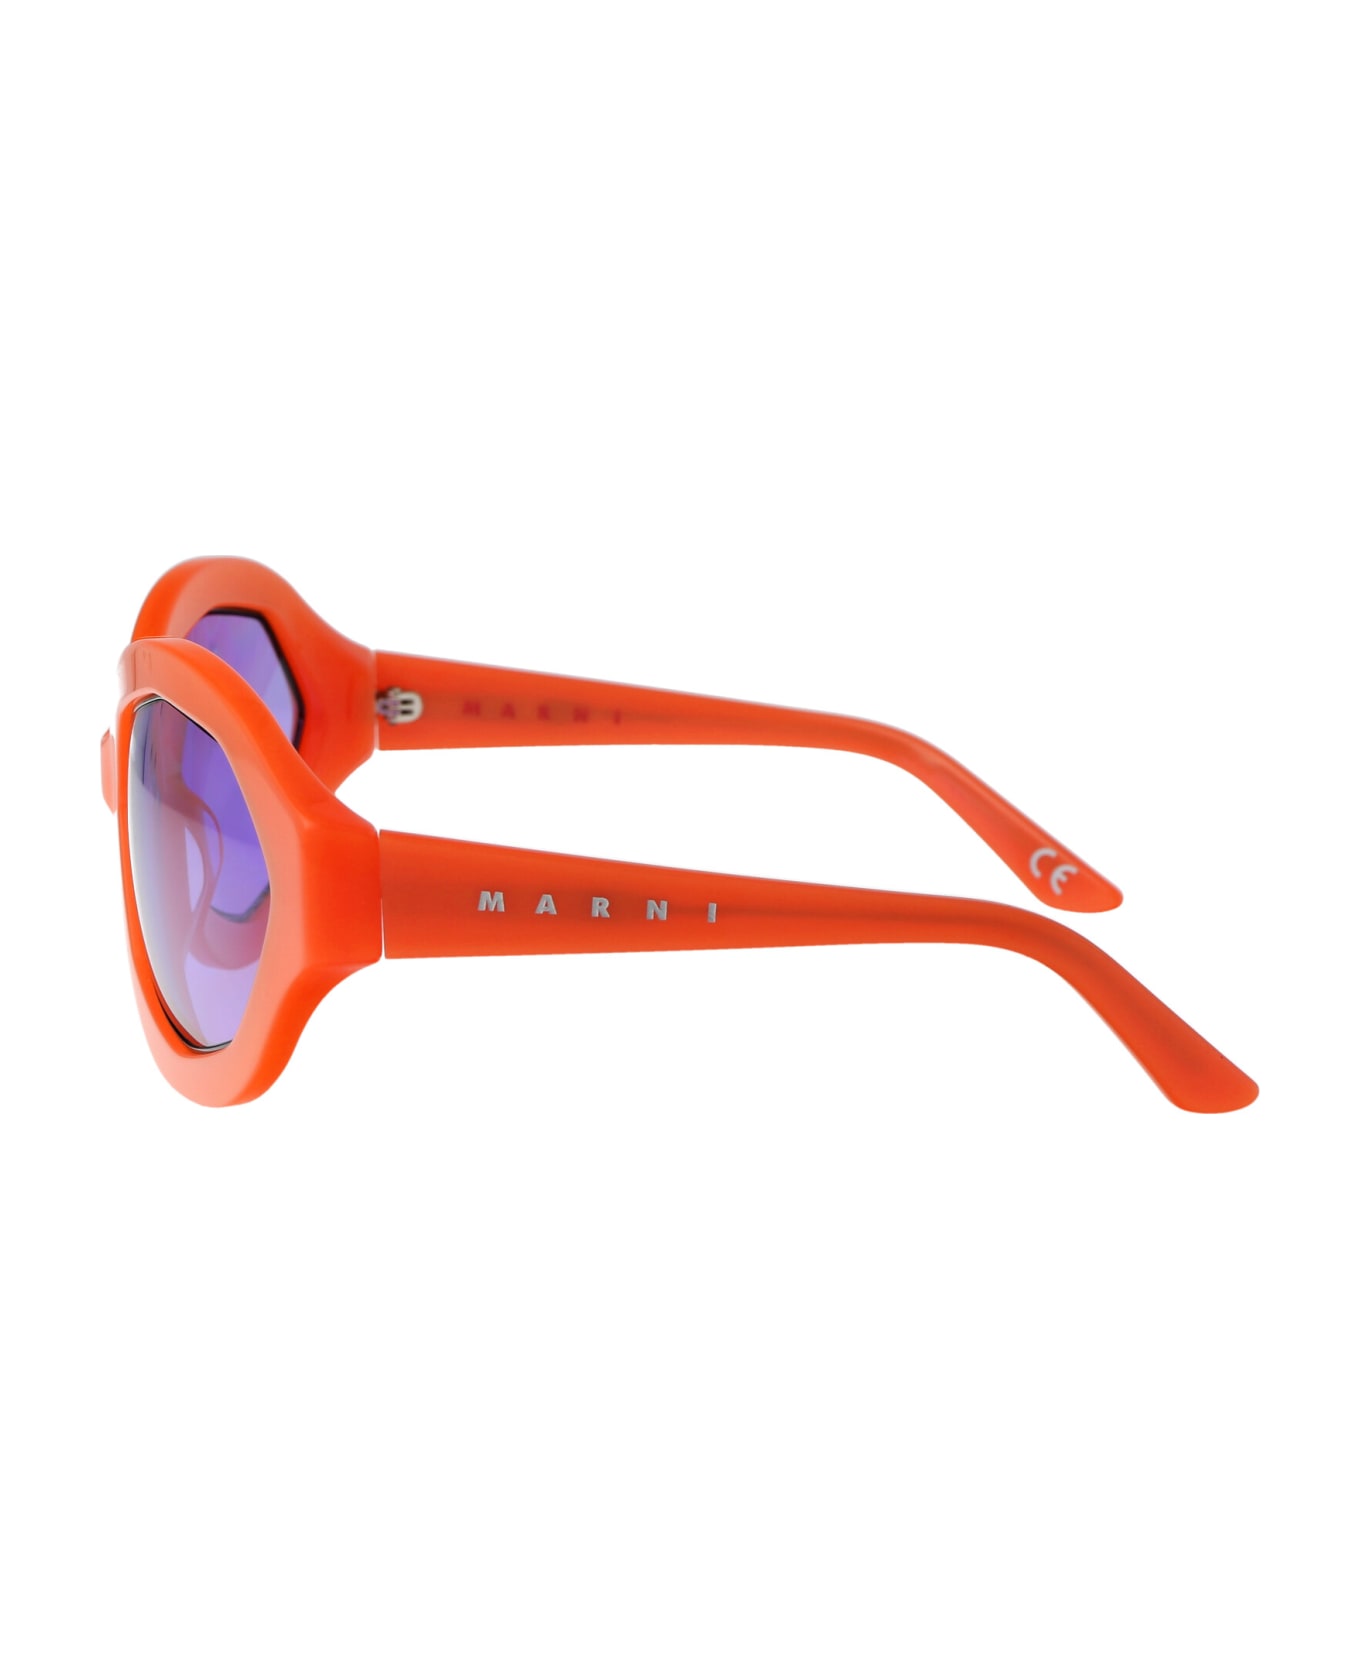 Marni Eyewear Cumulus Cloud Sunglasses - CLOUD ORANGE